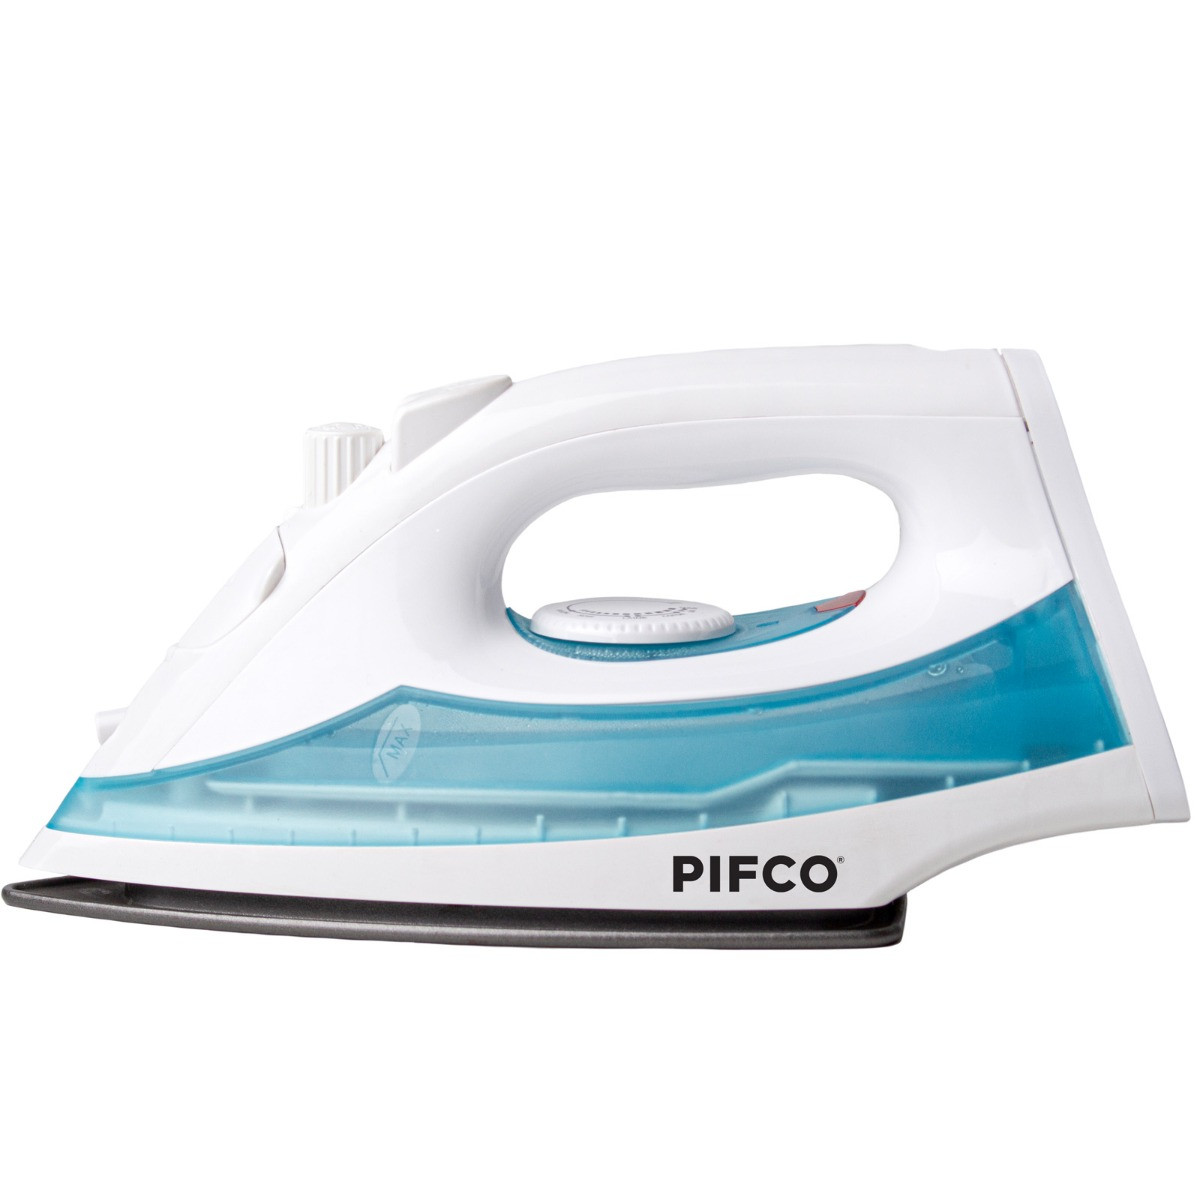 PIFCO Easy Steam Iron - 2000W>